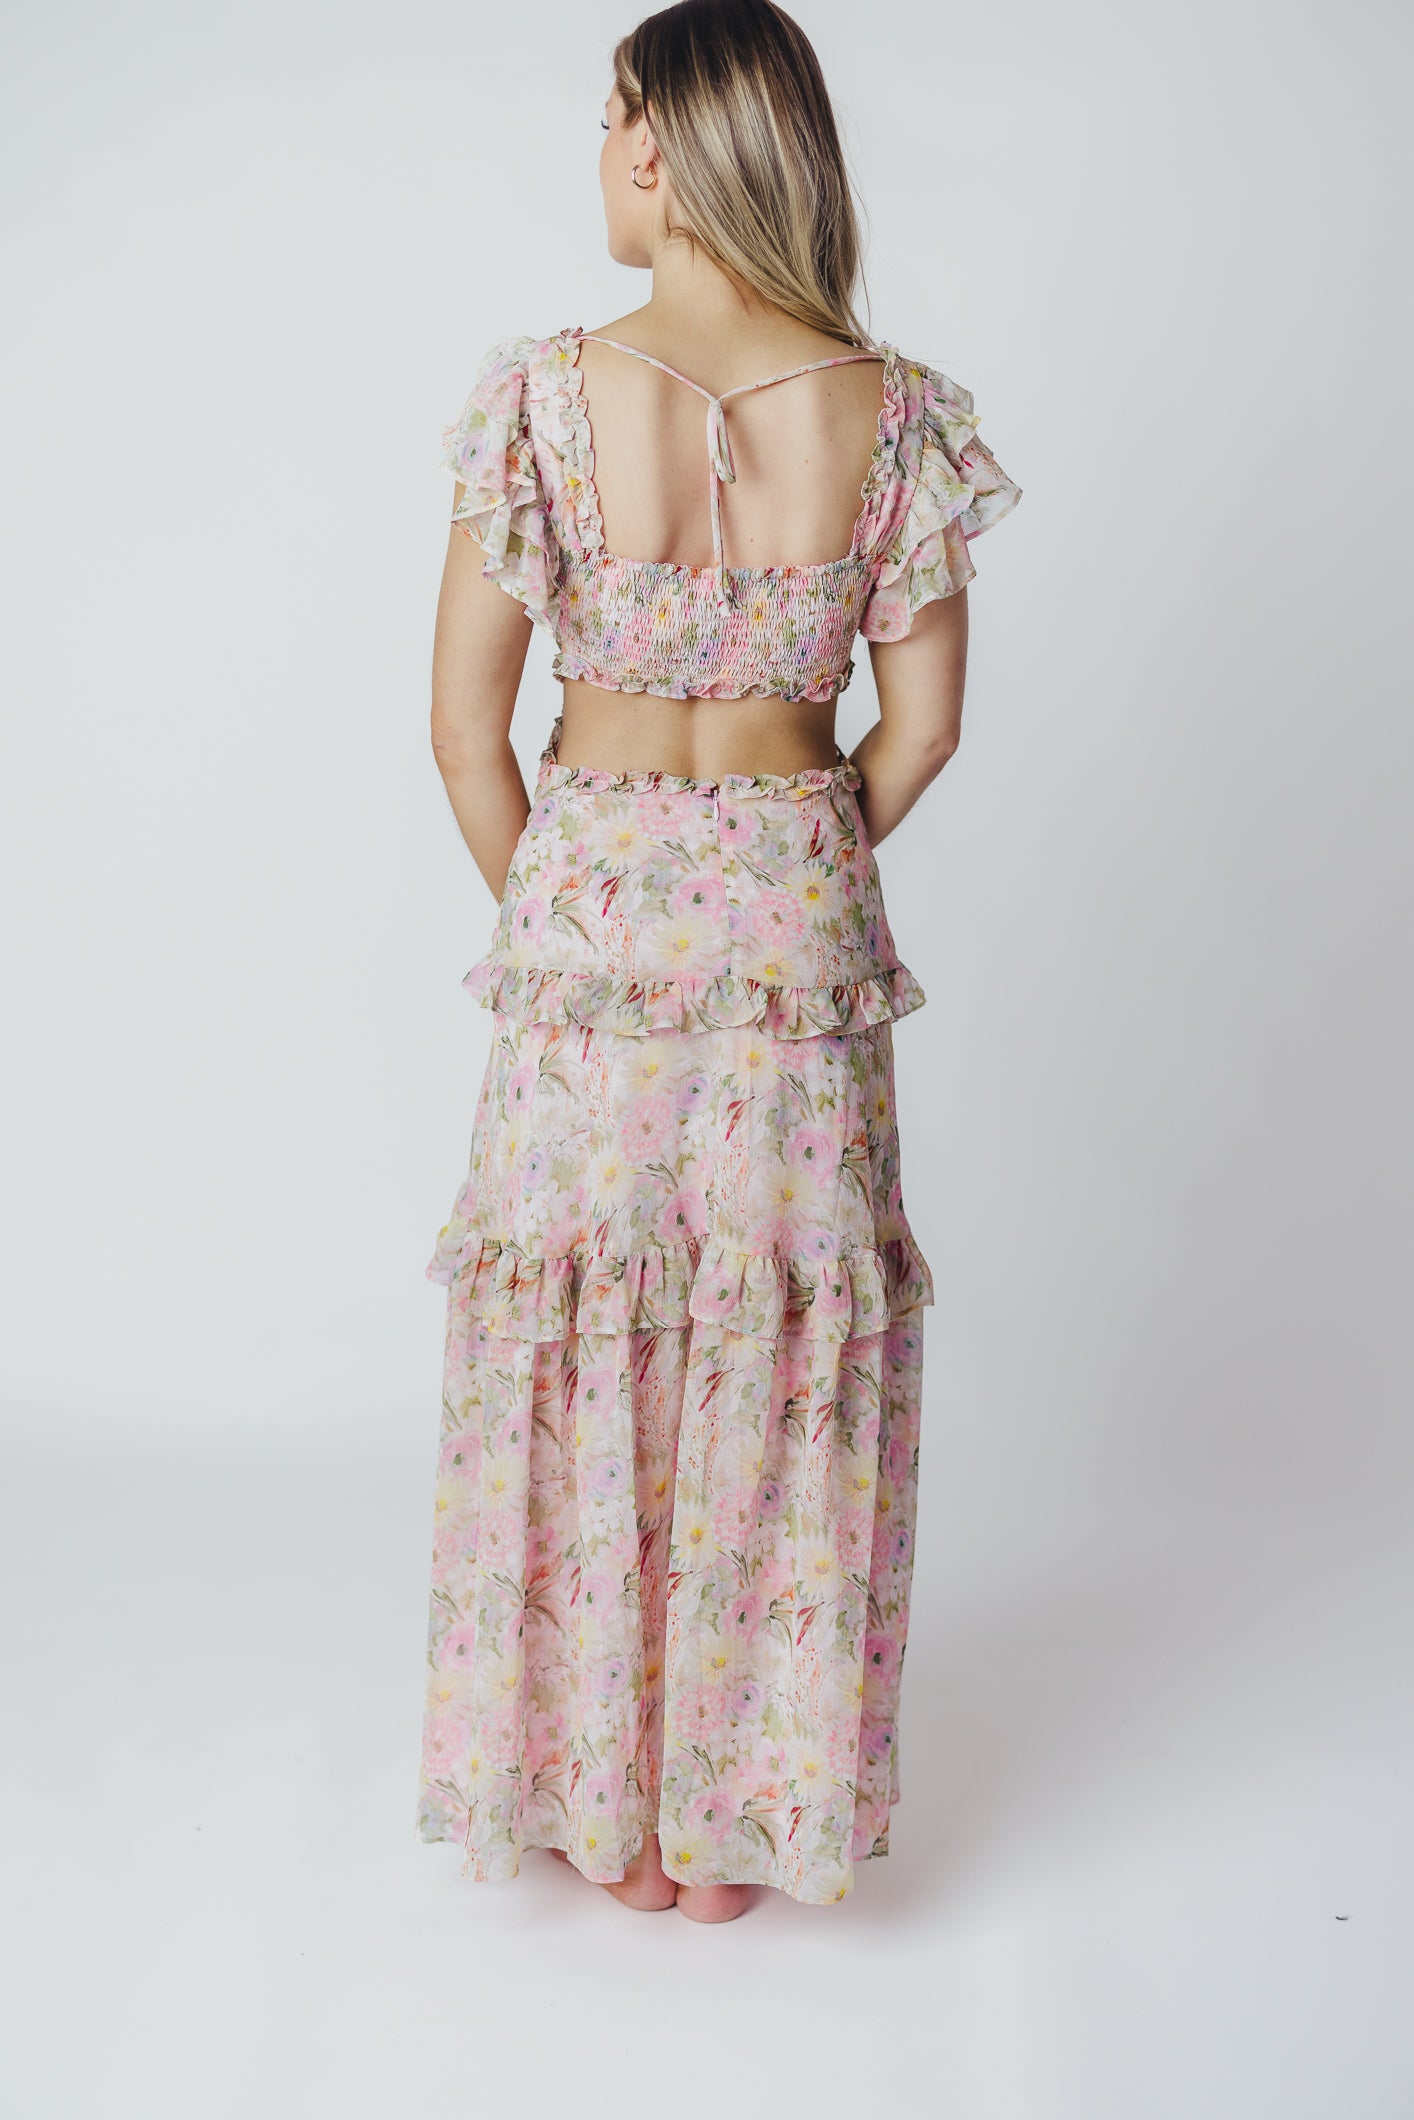 ASTR Millie Maxi Dress in Pink Floral